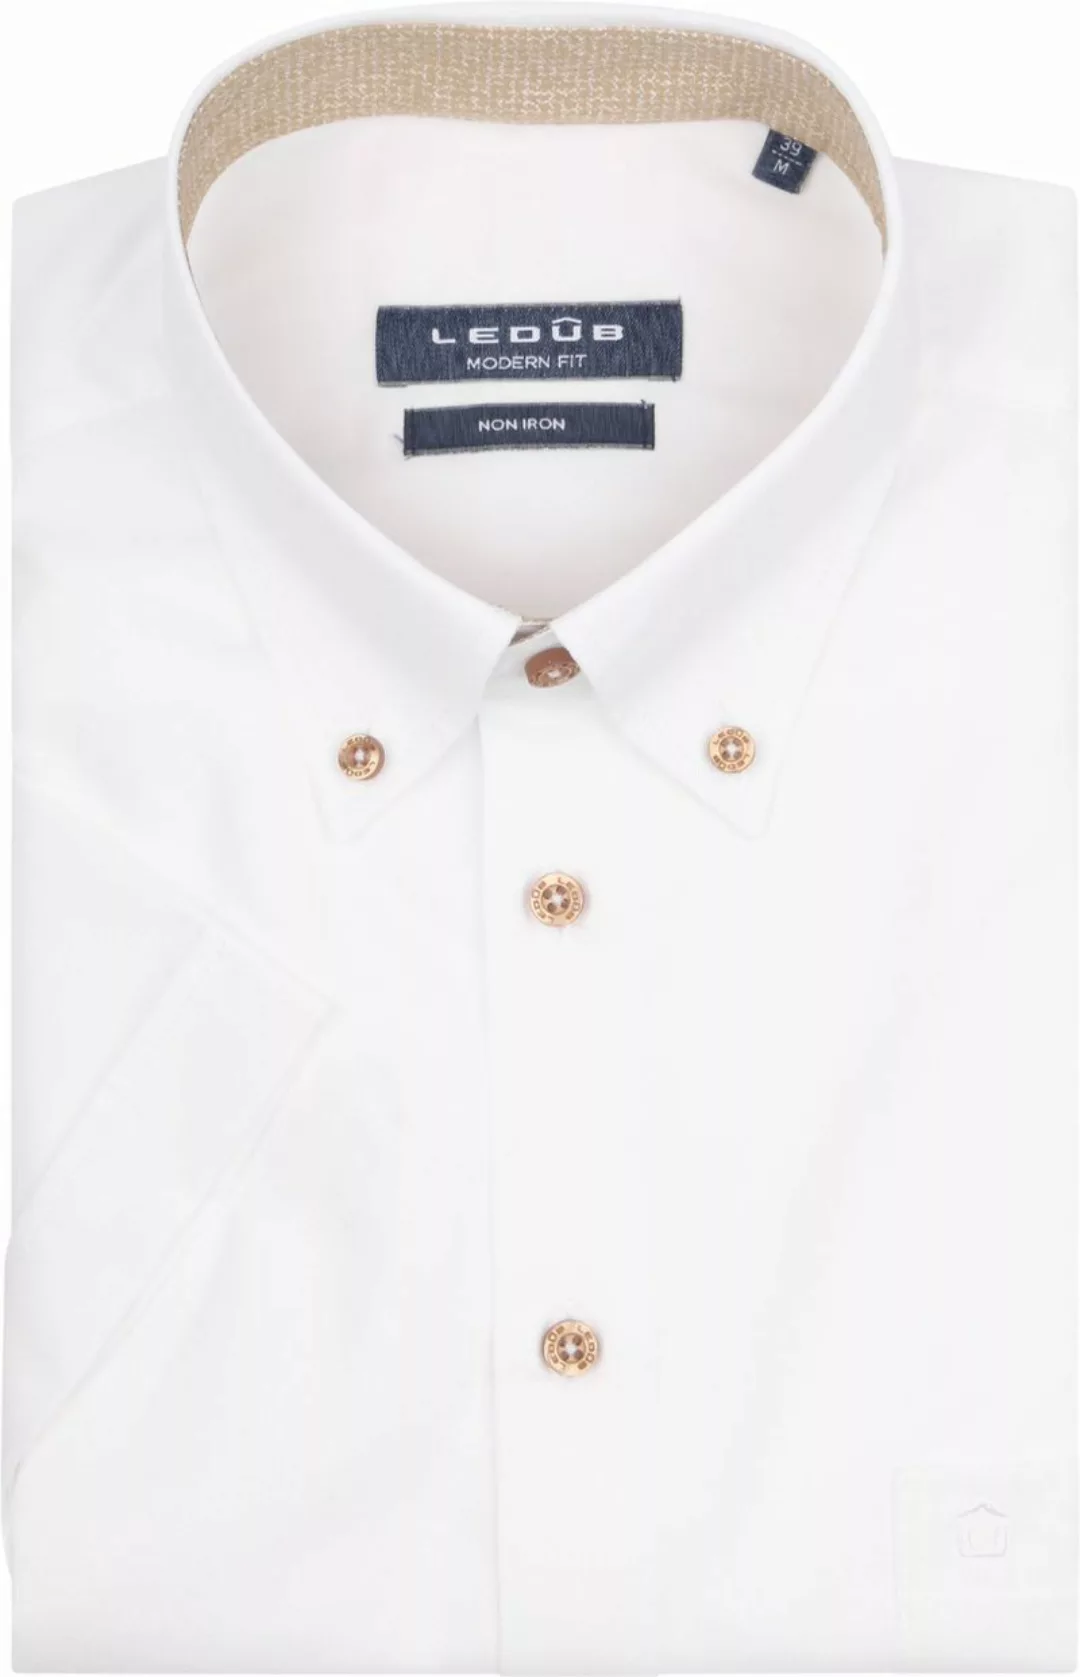 Ledub Short Sleeve Hemd Weiß Braun - Größe 39 günstig online kaufen